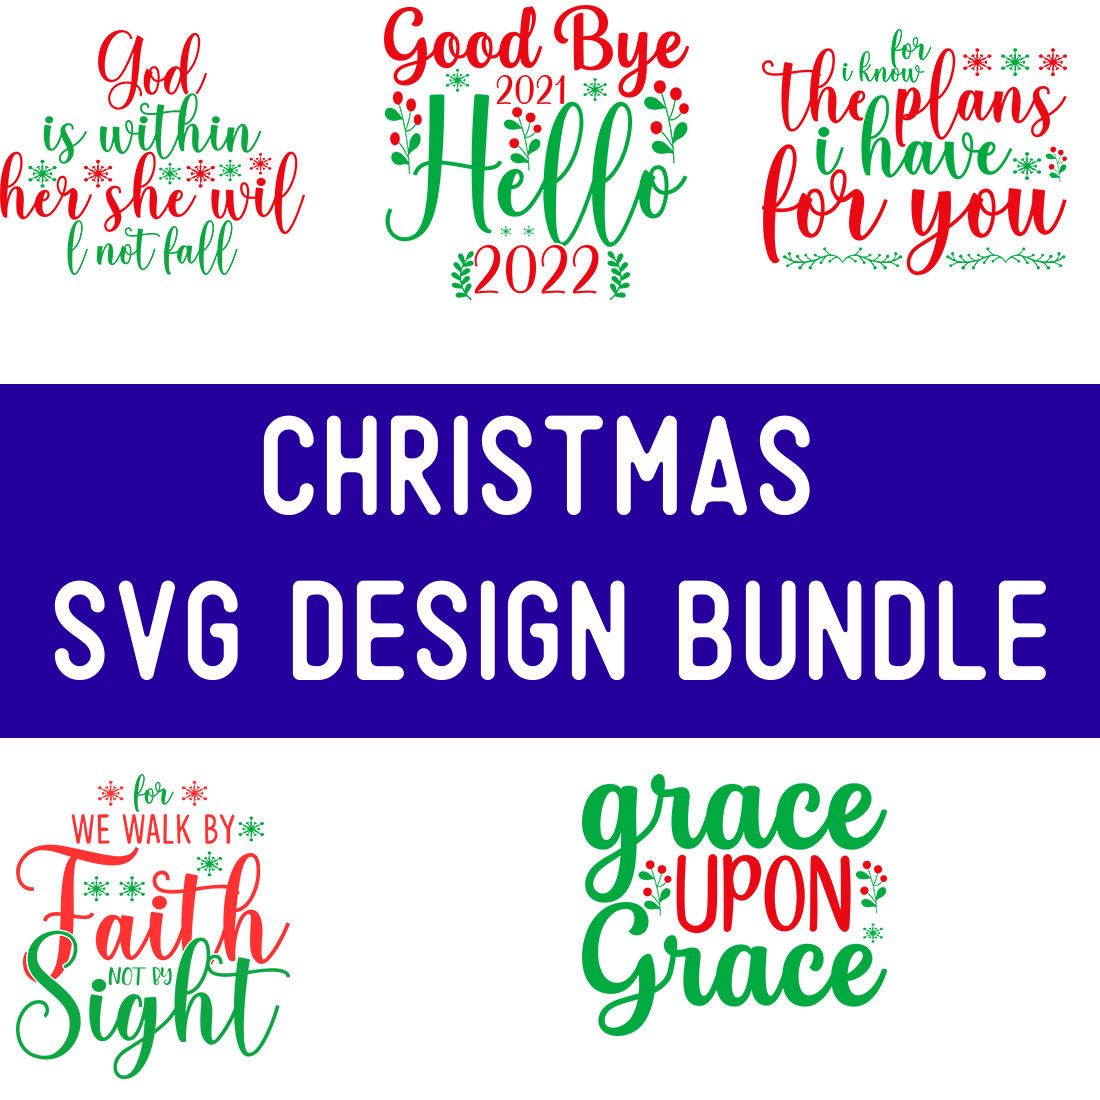 Christmas SVG Design Bundle preview image.